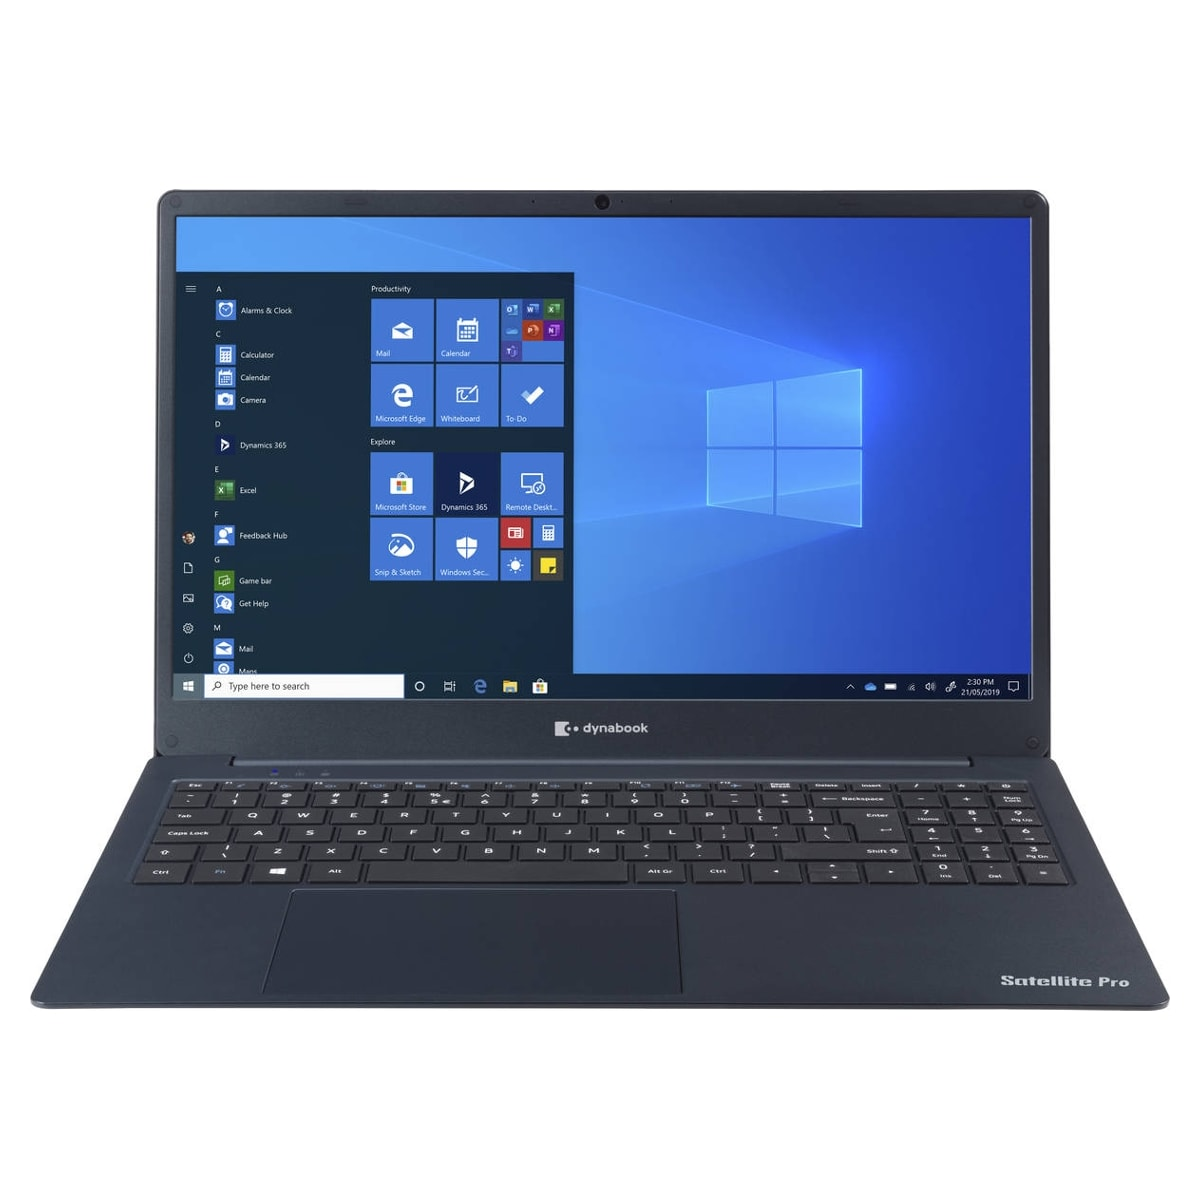 TOSHIBA A1PYS23E1128, Notebook mit 15,6 256 Zoll Display, Intel®, Blau GB GB RAM, 8 SSD